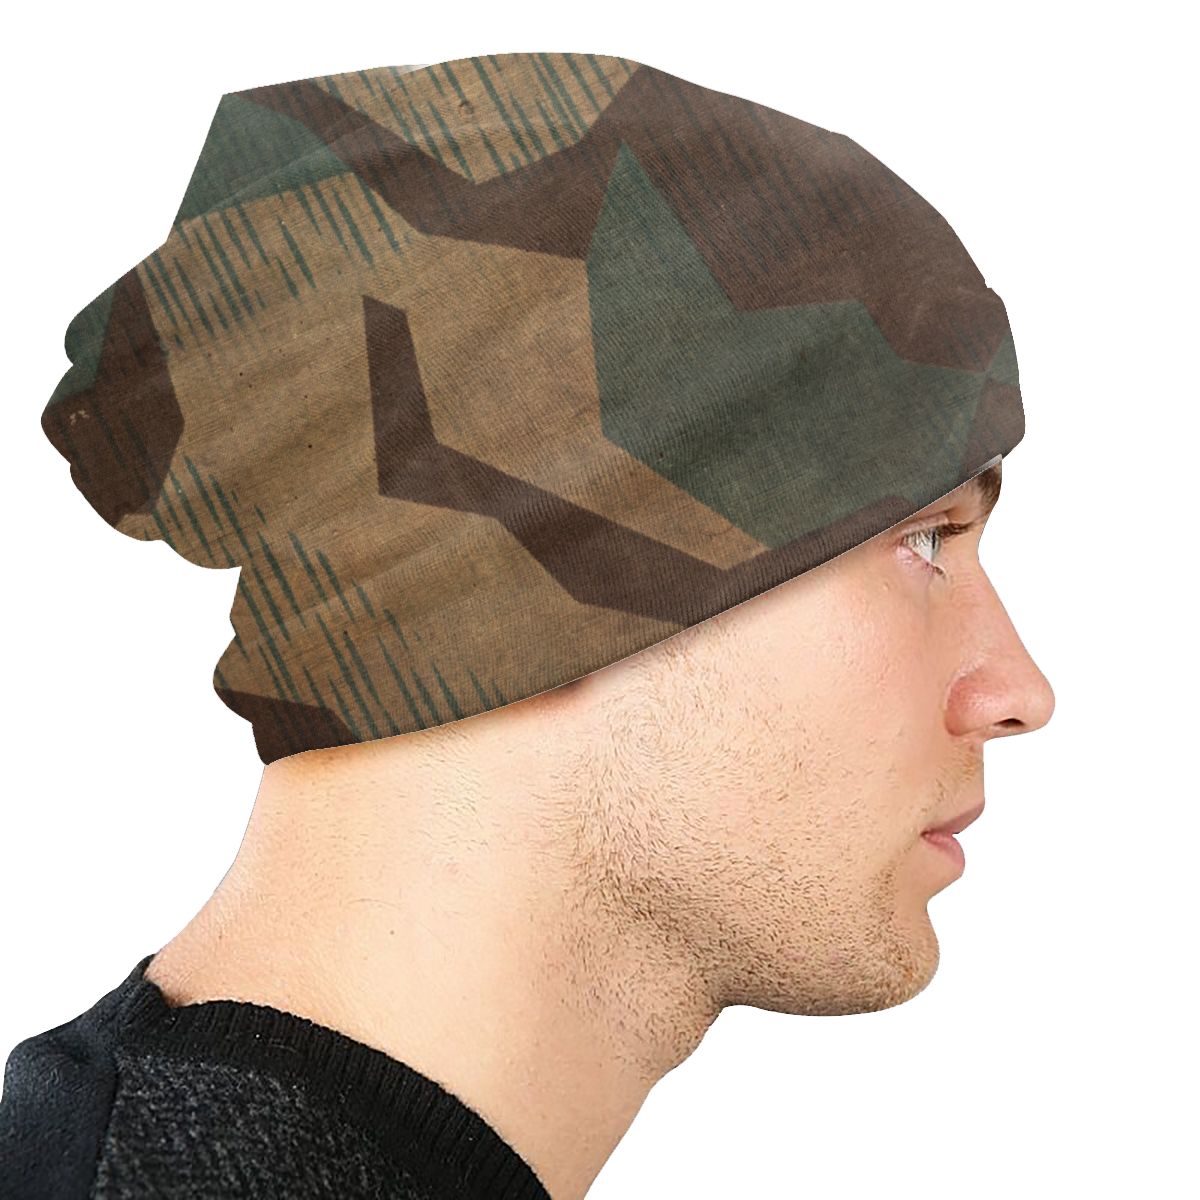 Splintertarn German WW2 Camouflage Bonnet Beanie Knitted Hat  Women Military Army Tactical Camo Warm Winter Skullies Beanies Cap